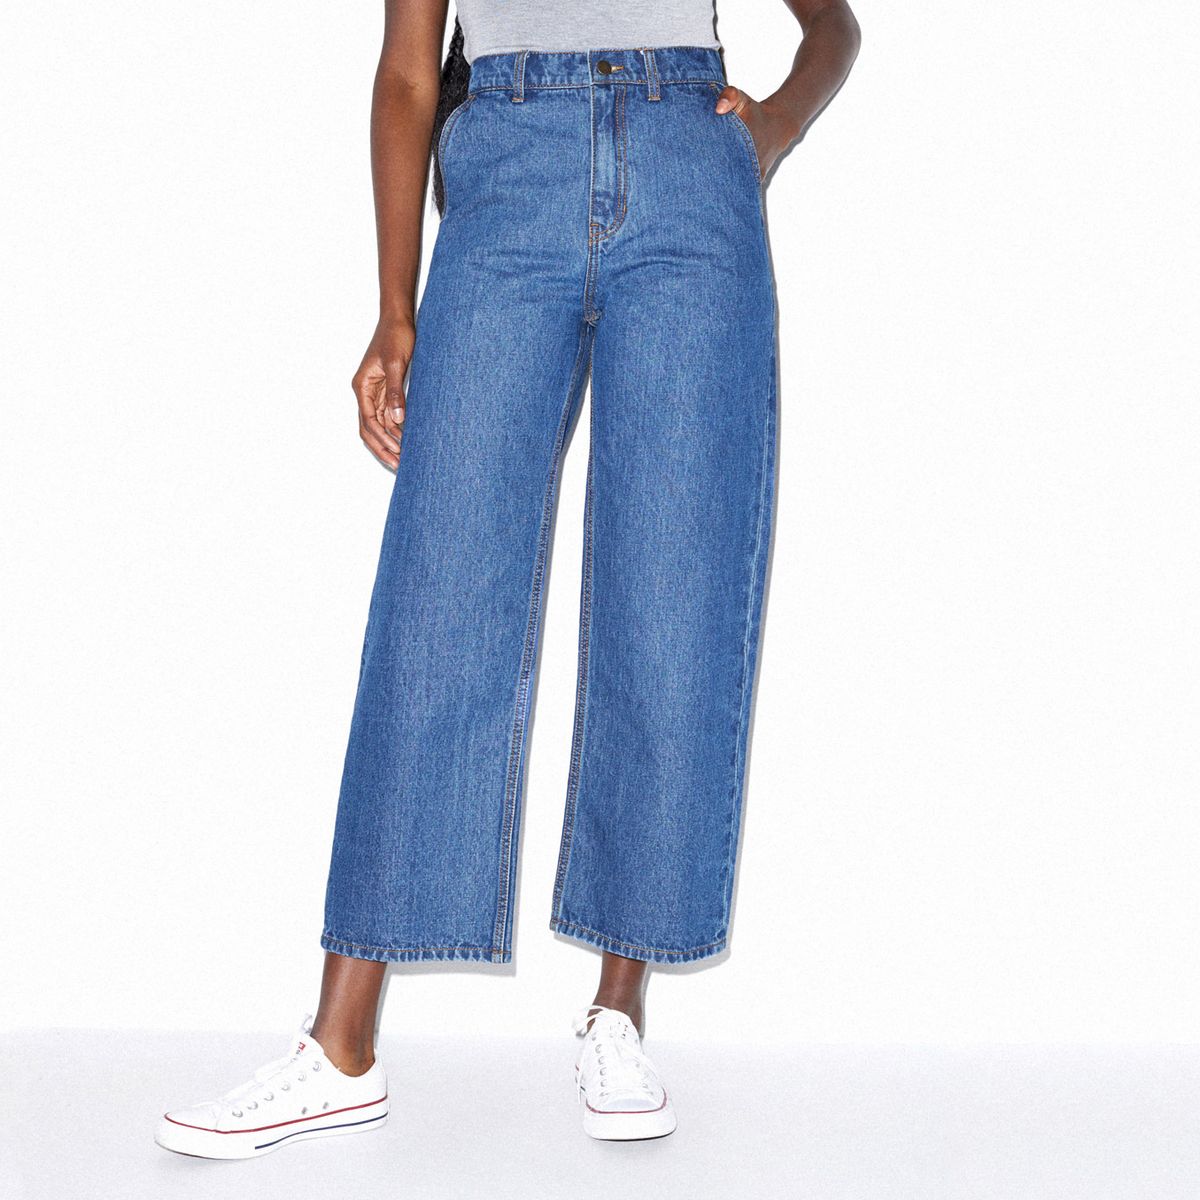 curve appeal jeans amazon